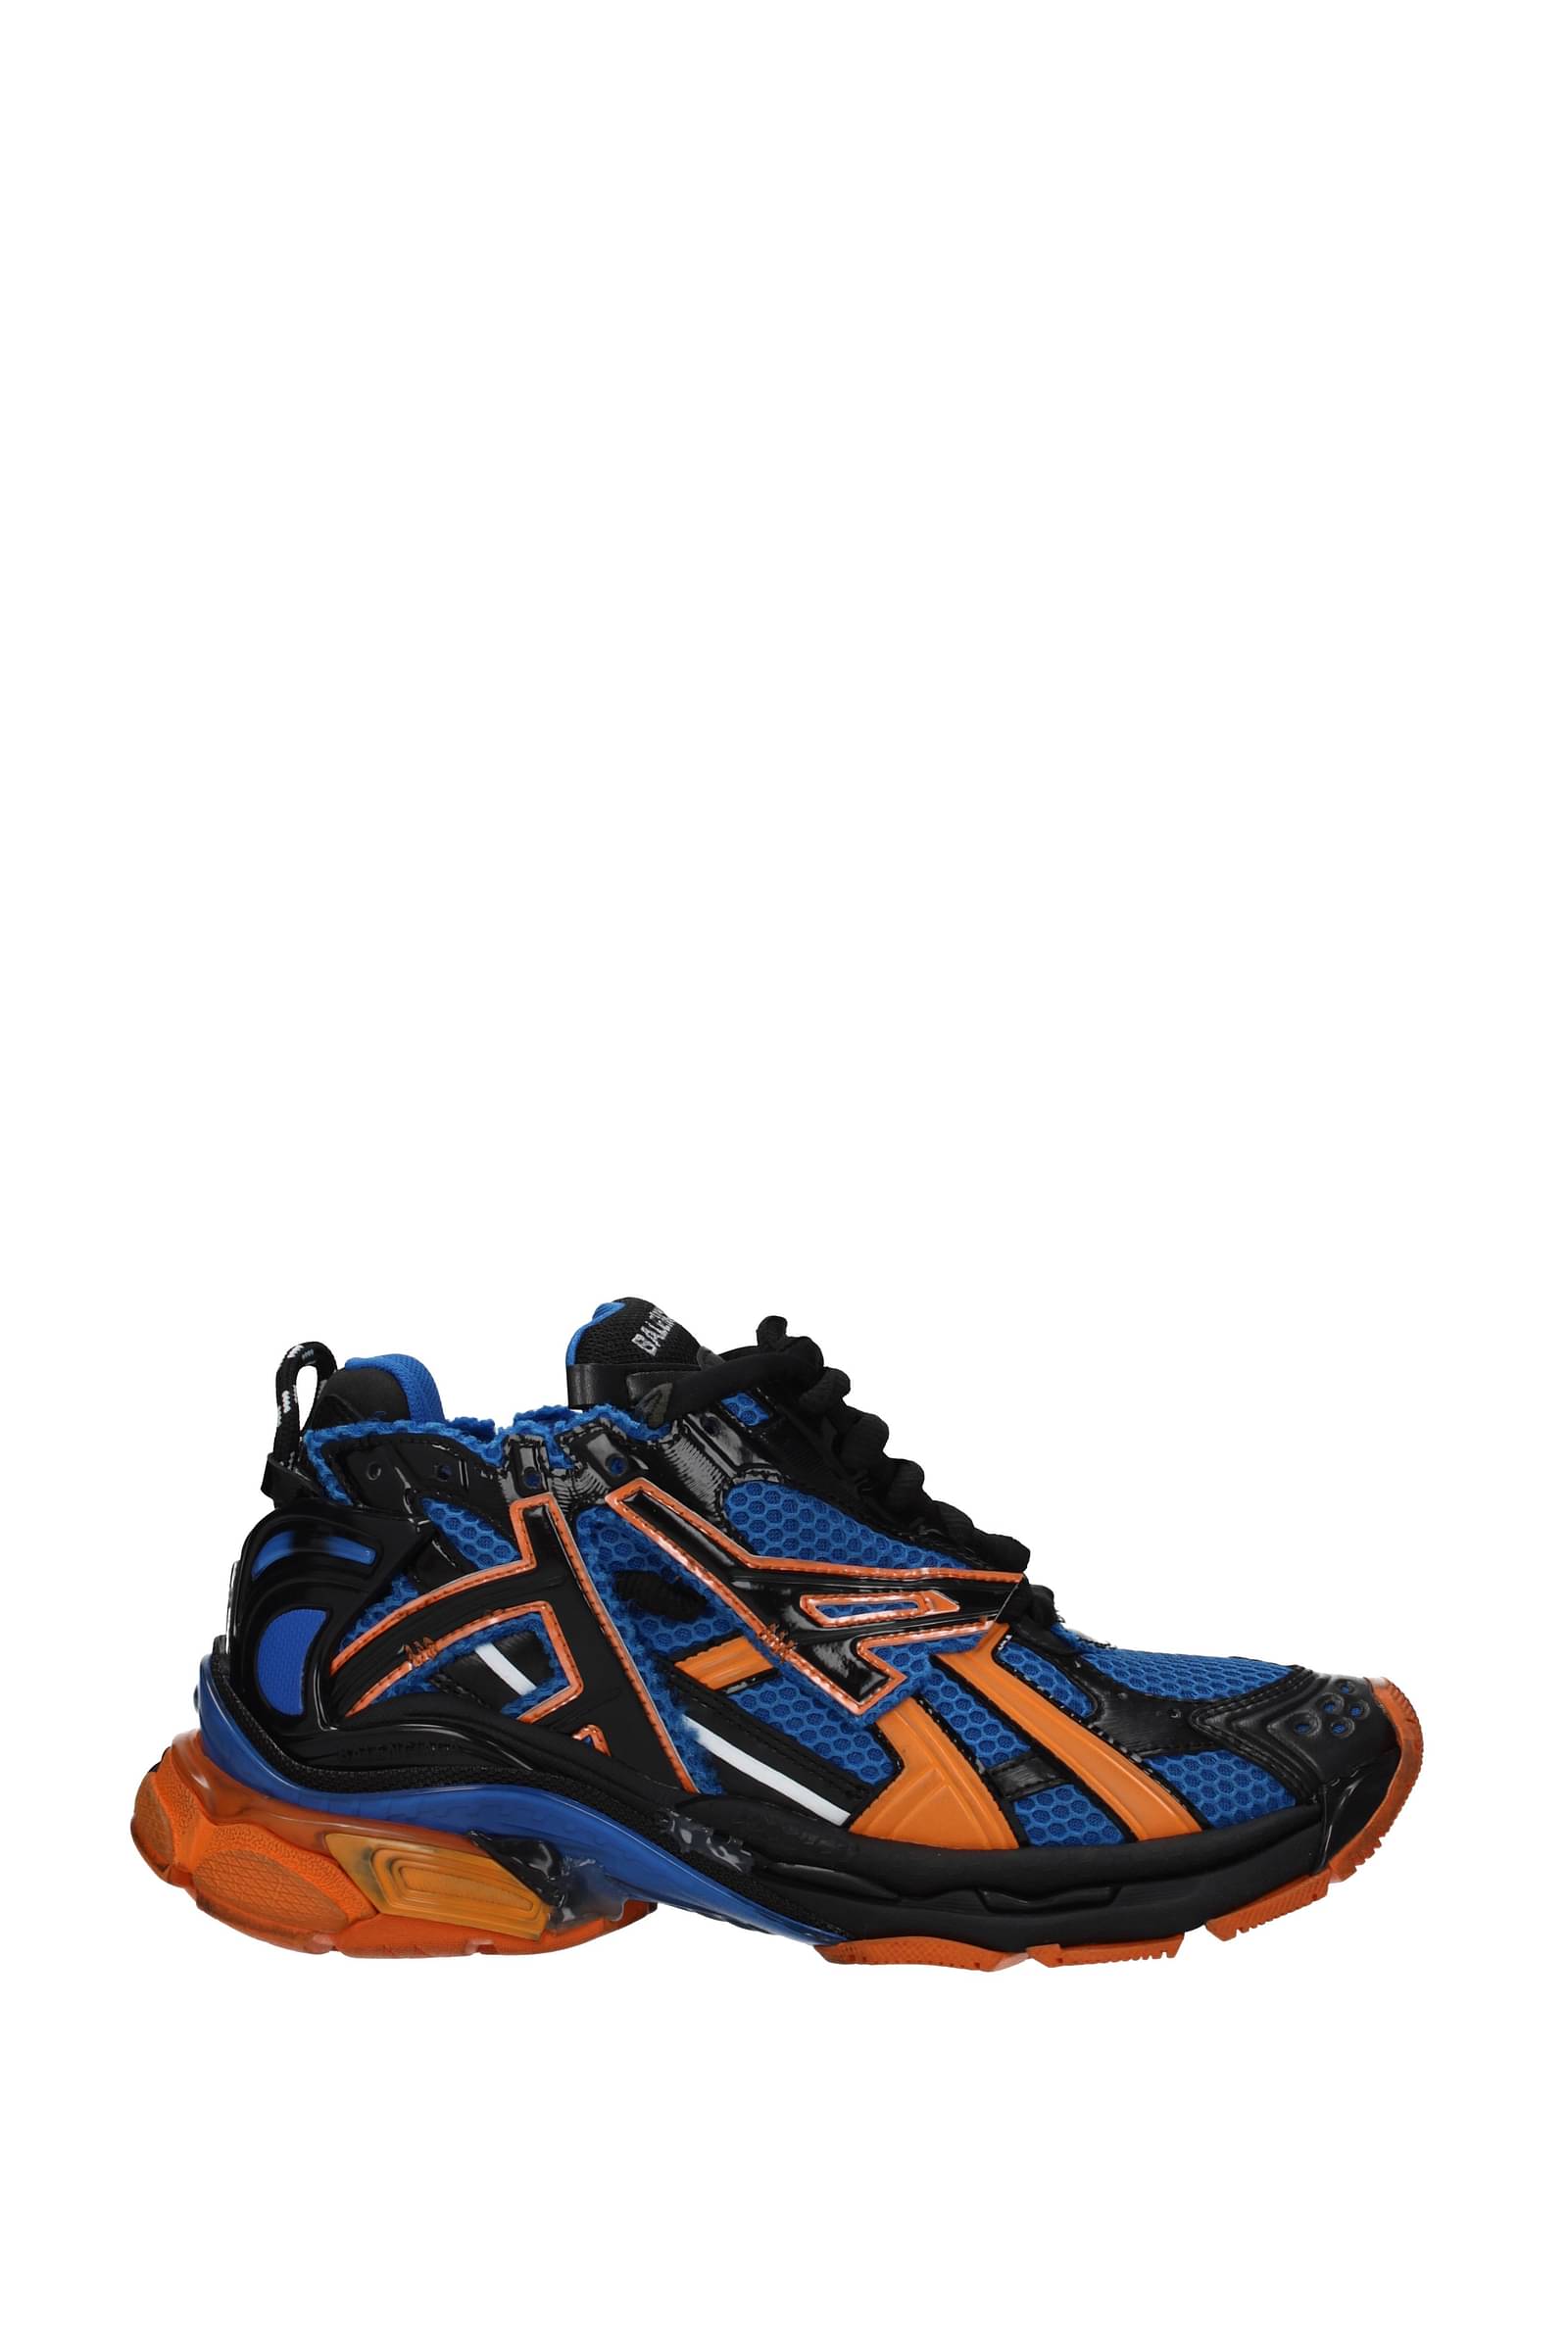 Balenciaga Sneakers runner Men 677403W3RB34719 Fabric Blue Orange 740€